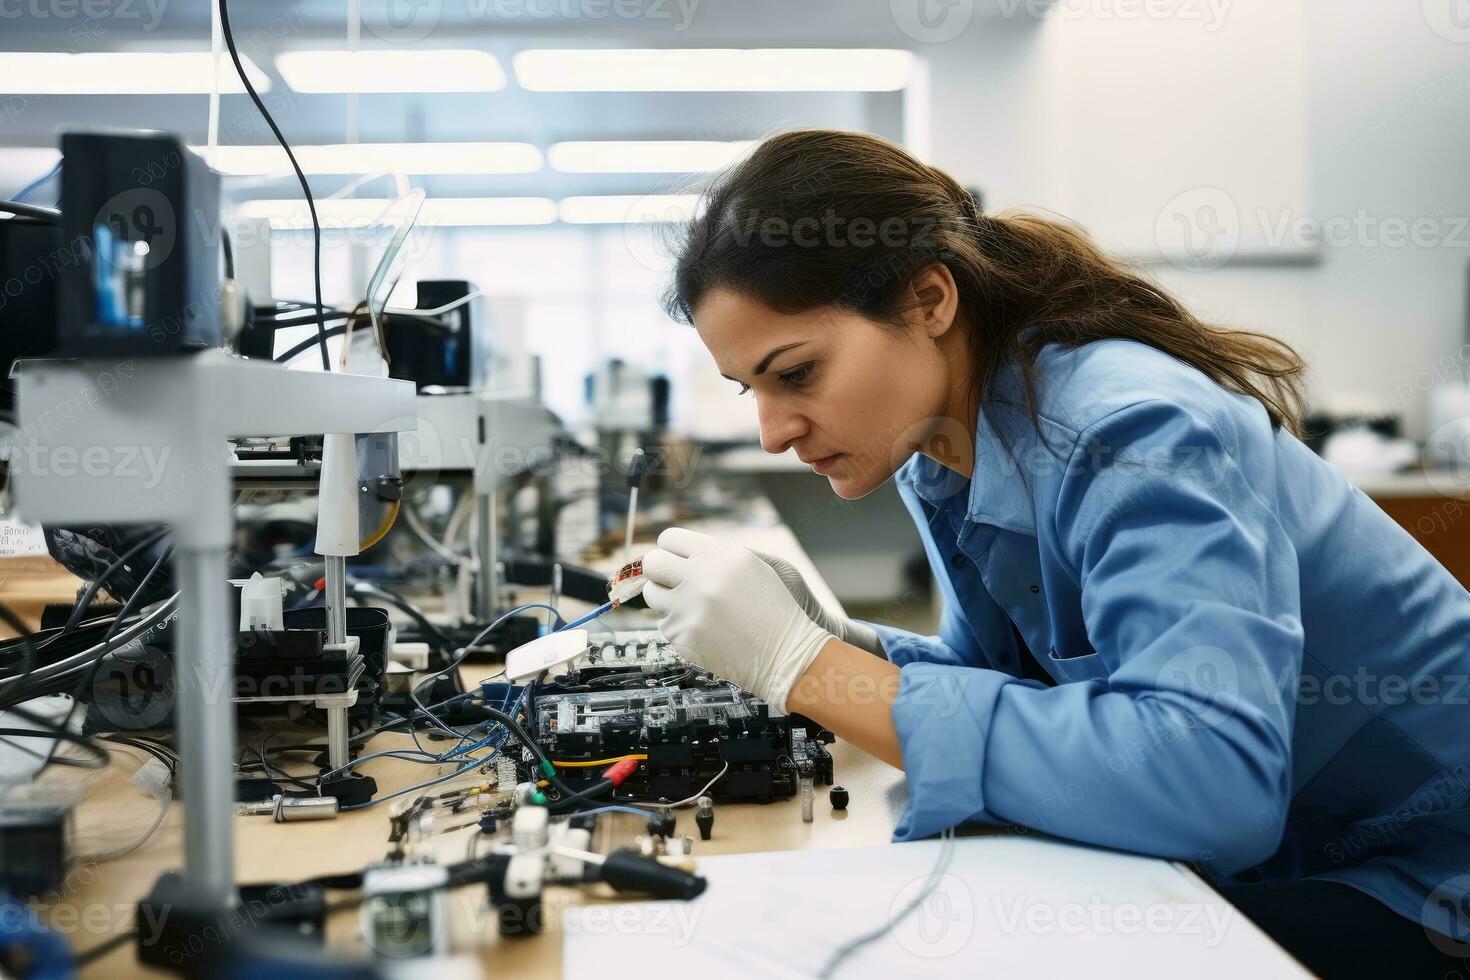 An electronics technician at work. AI generative photo